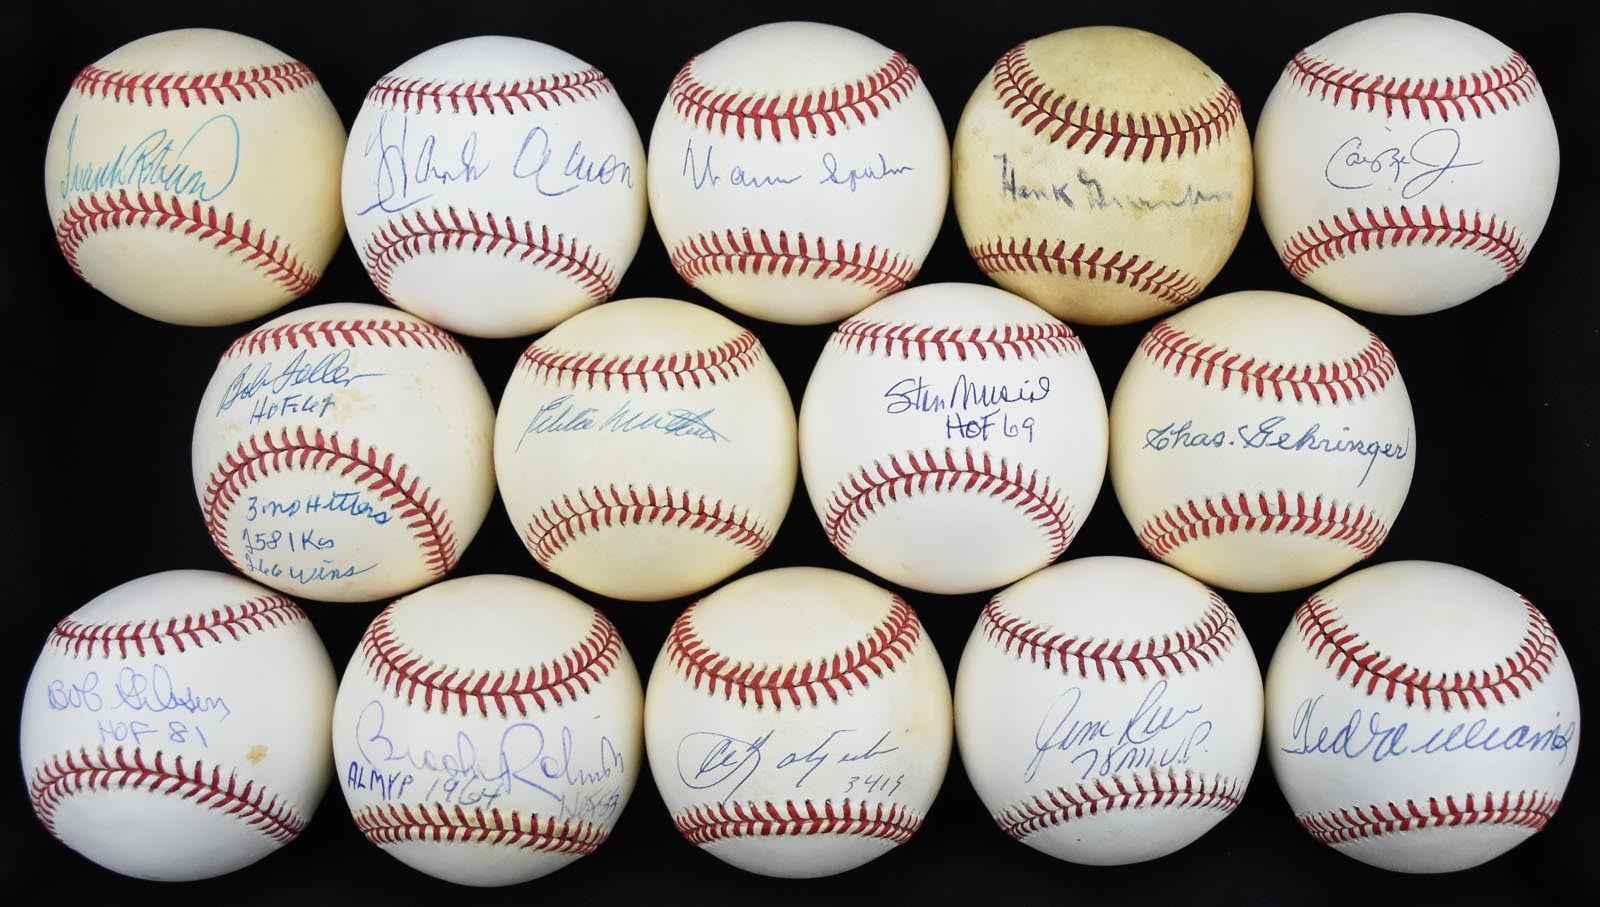 - Hall of Famers Signed Baseballs with Hank Greenberg (15+)